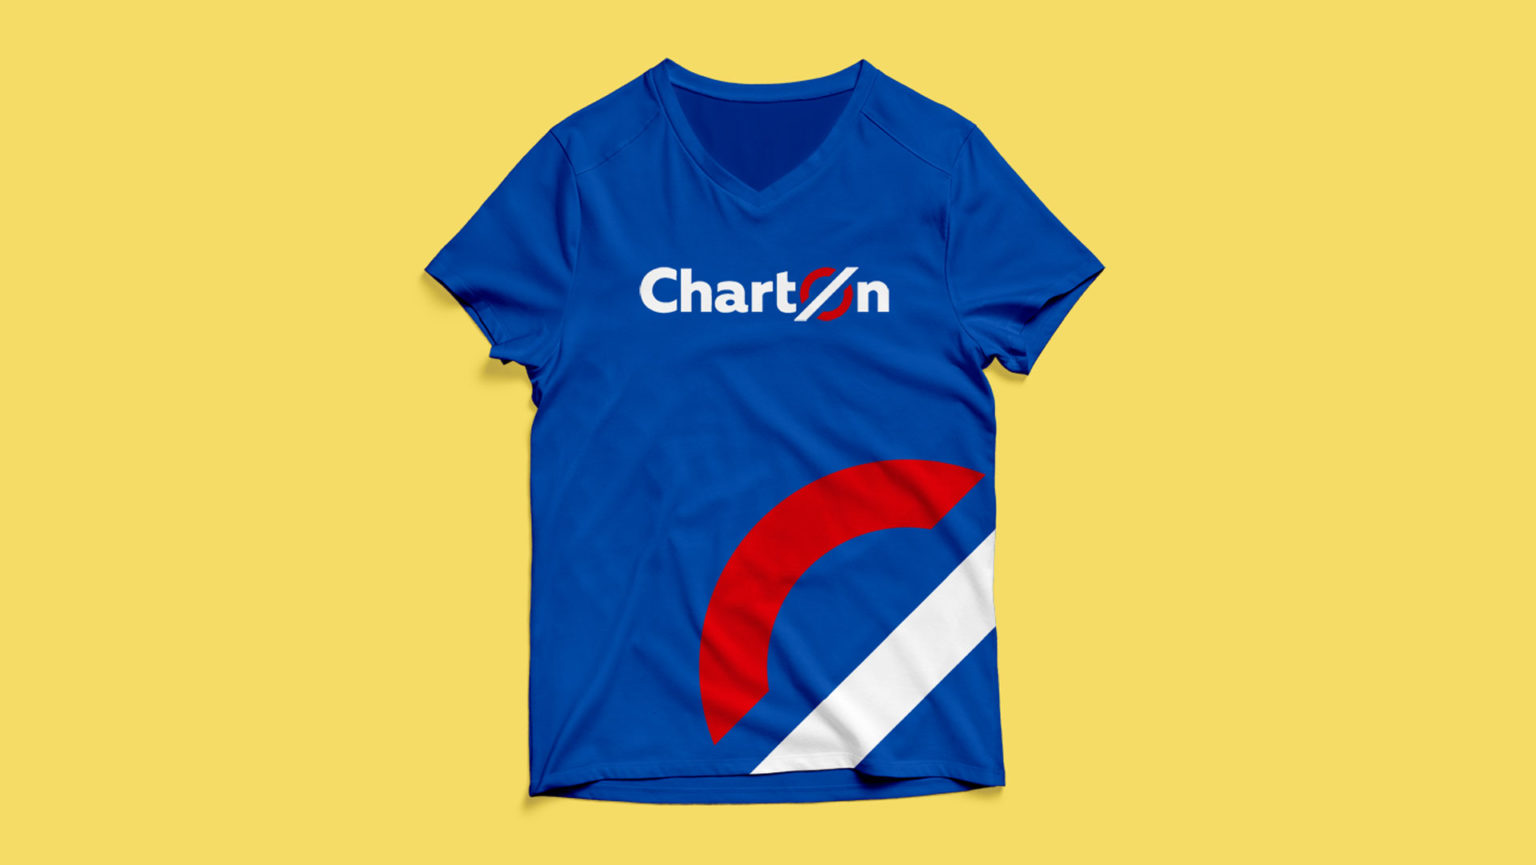 charton-identidad-corporativa-branding-camiseta